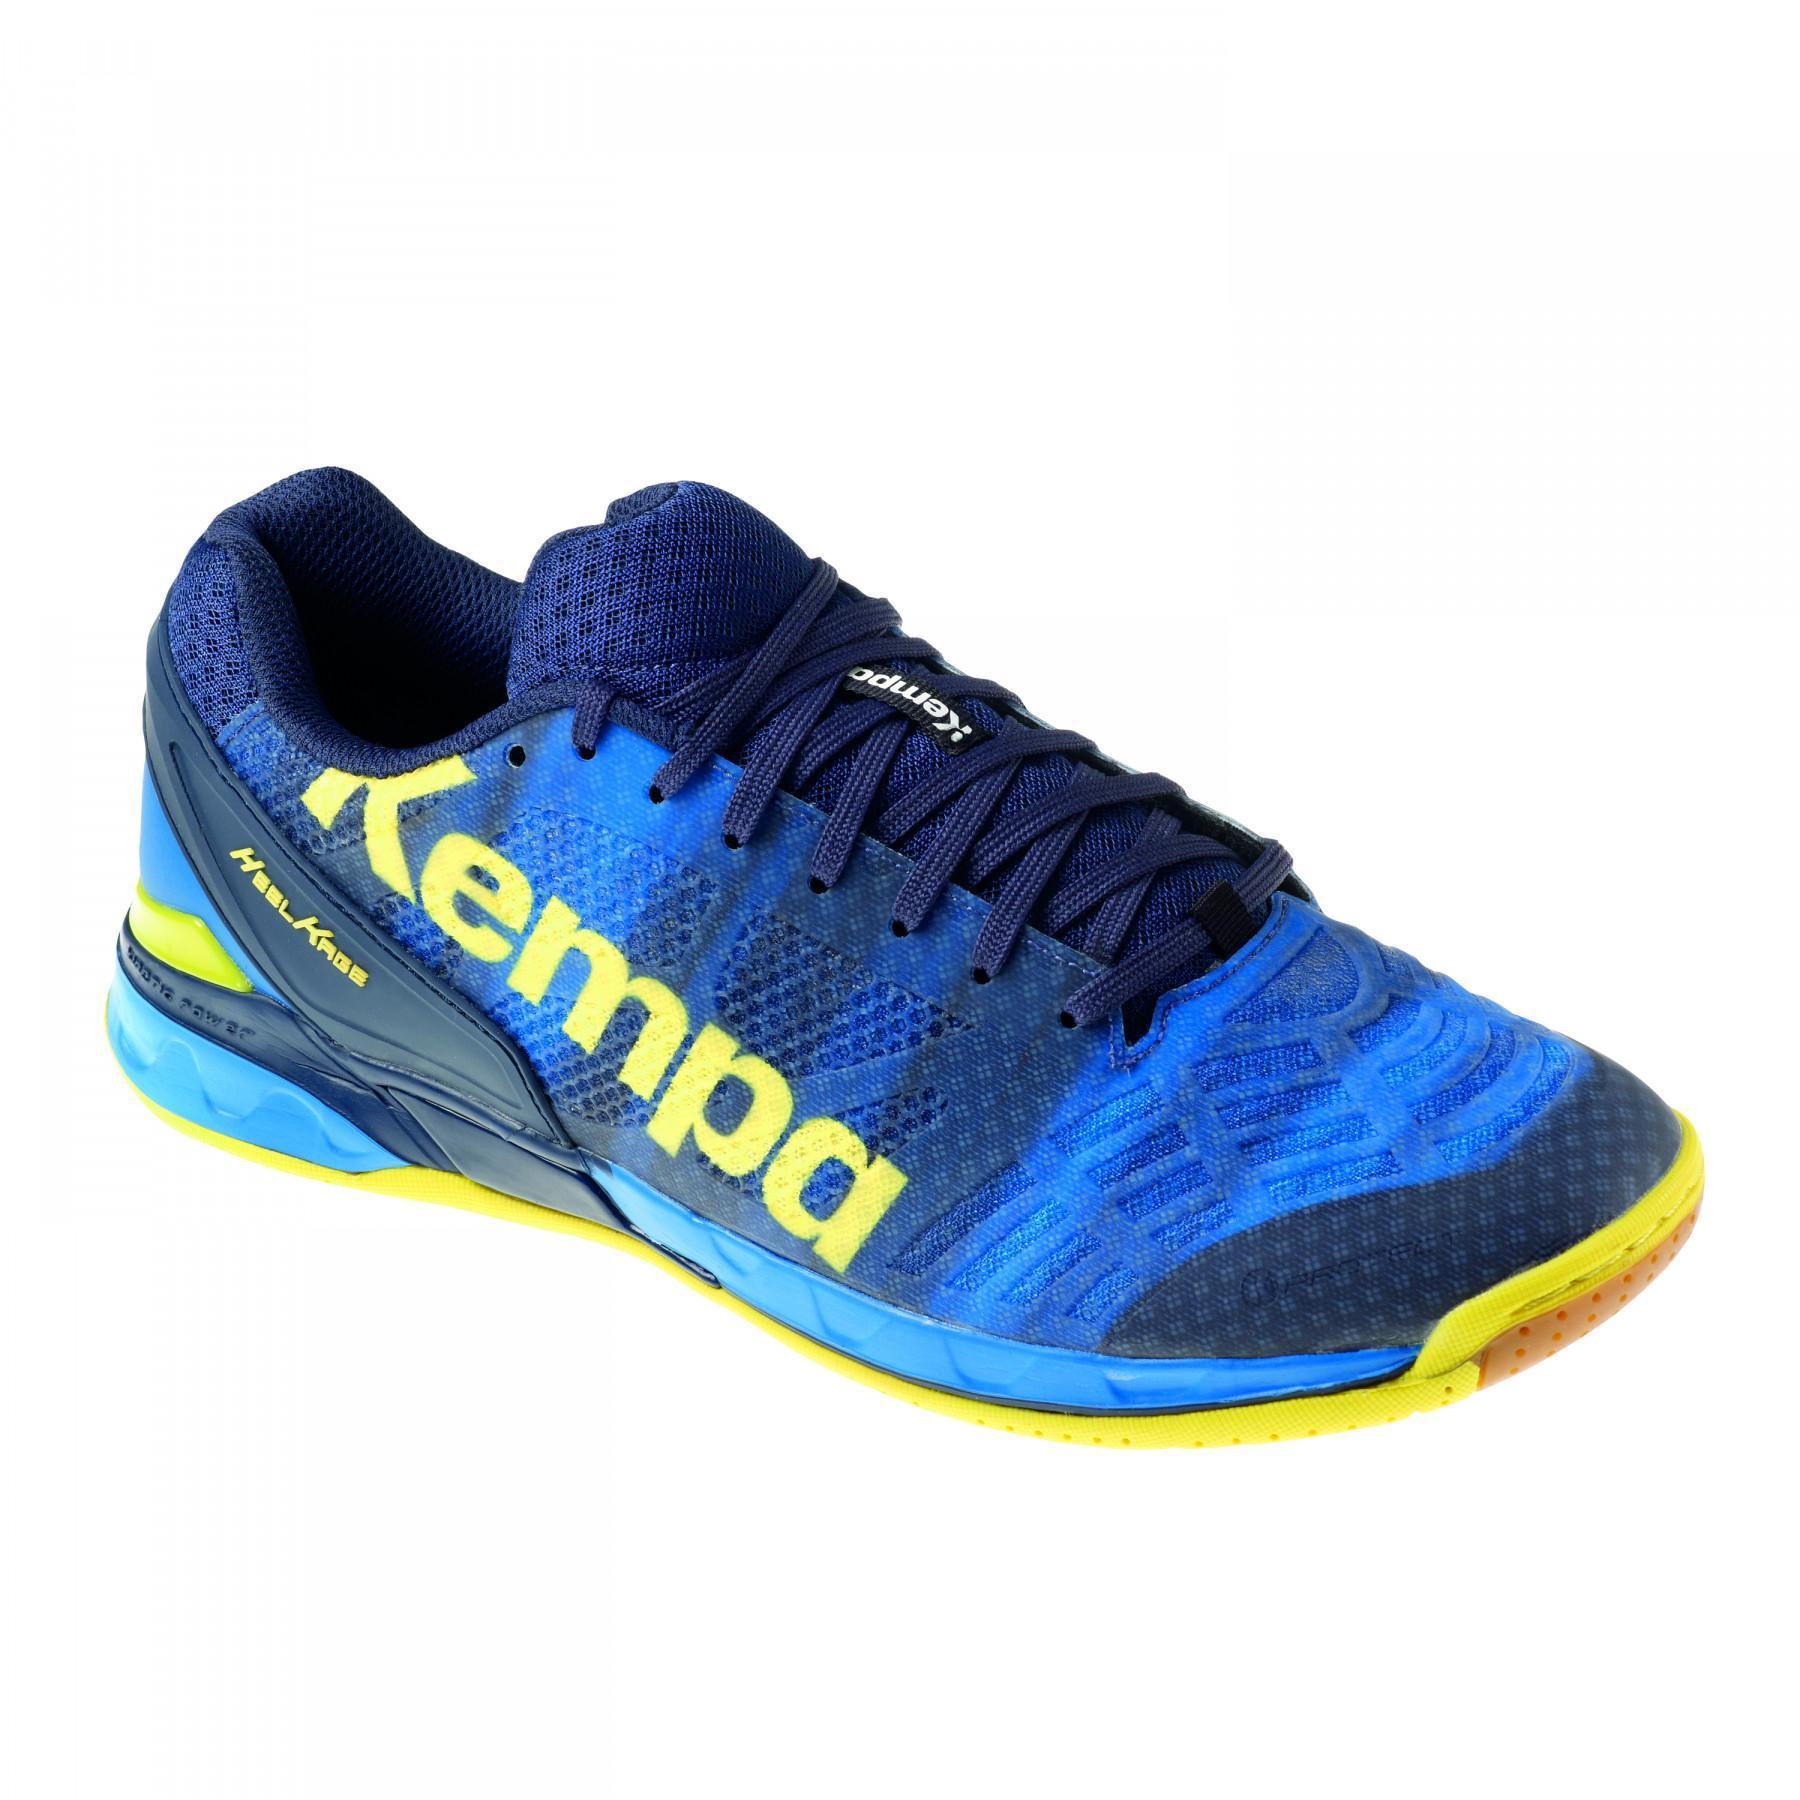 Shoes Kempa Attack one bleu/jaune